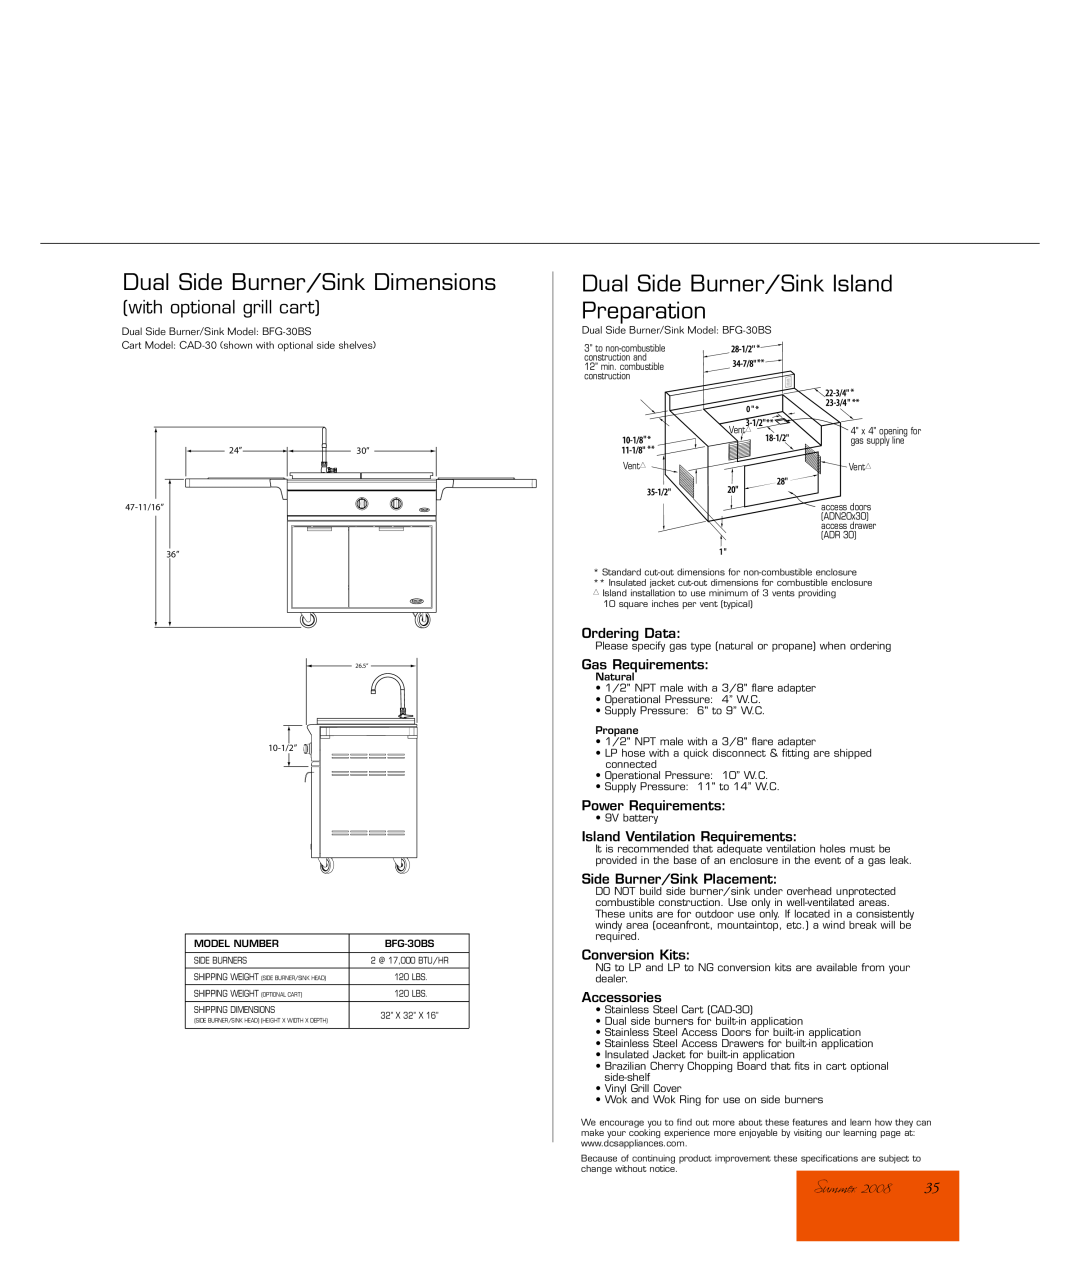 DCS BFG-30BS Summer, Dual Side Burner/Sink Dimensions, Dual Side Burner/Sink Island Preparation, with optional grill cart 